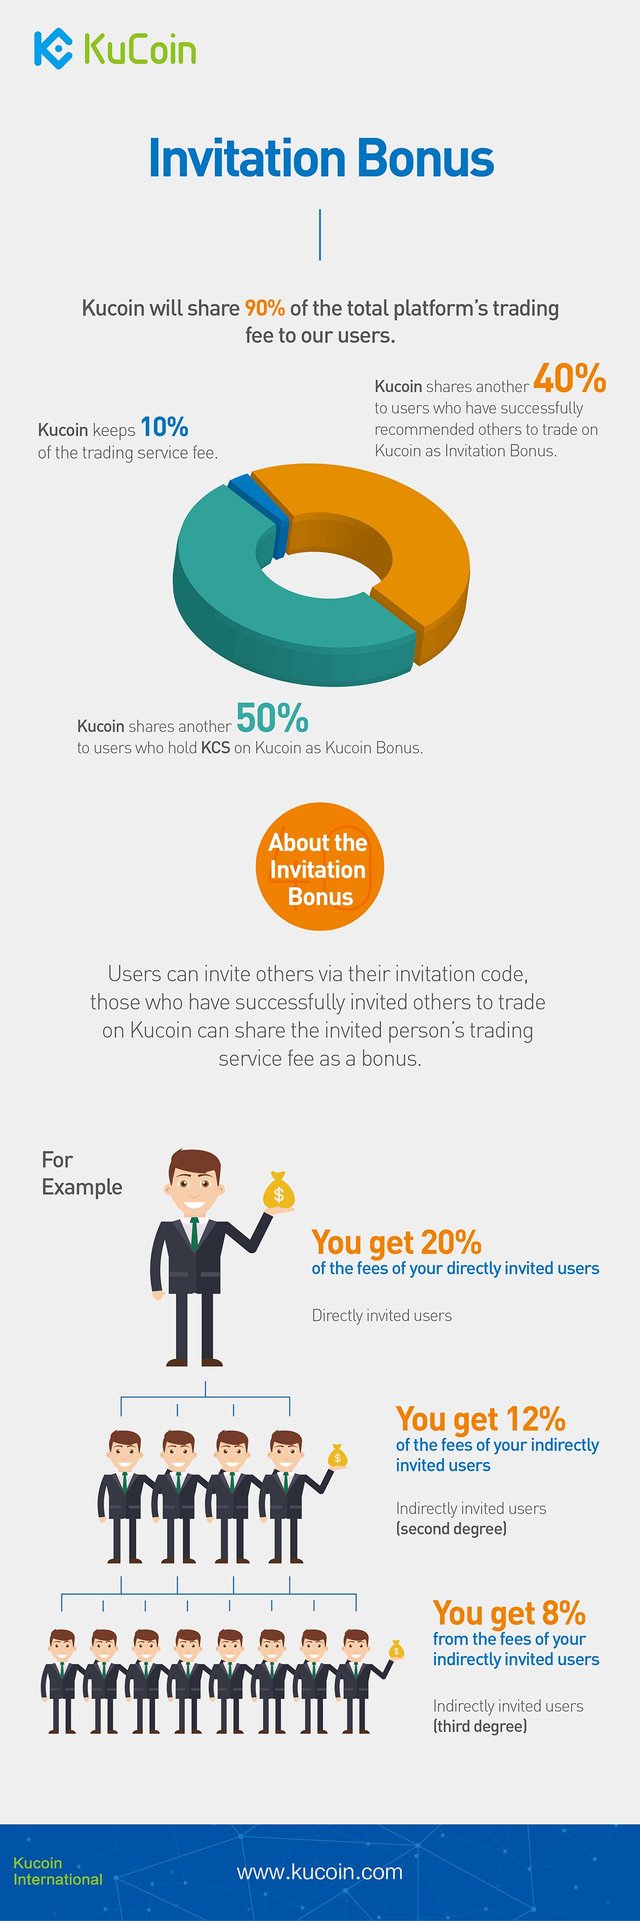 KuCoin Invitation Bonus Infographic